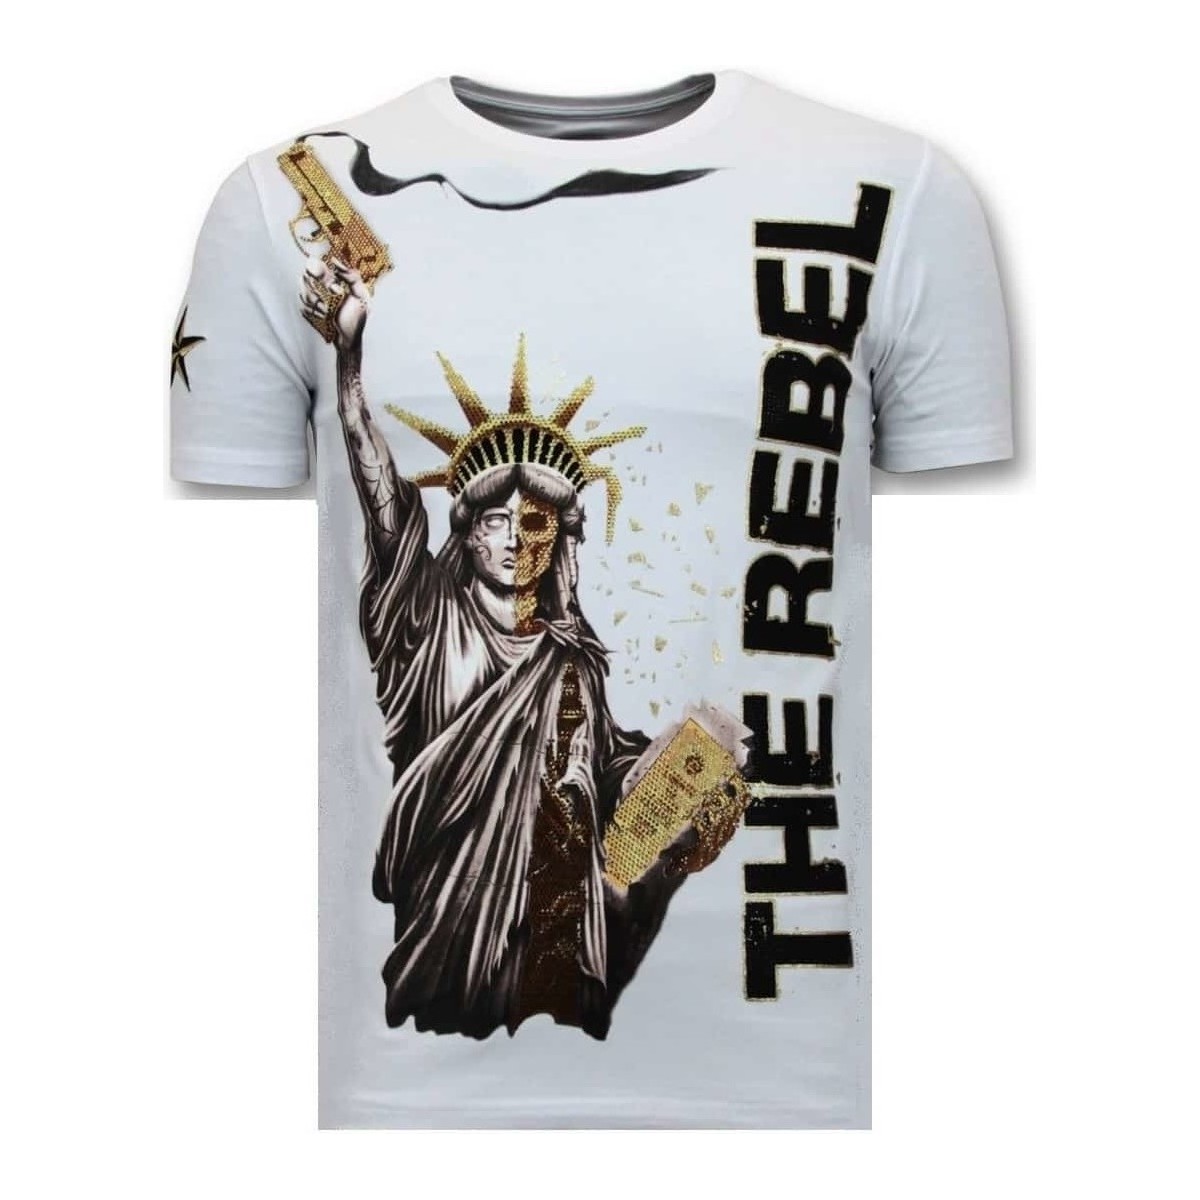 Kleidung Herren T-Shirts Local Fanatic The Rebel White Weiss